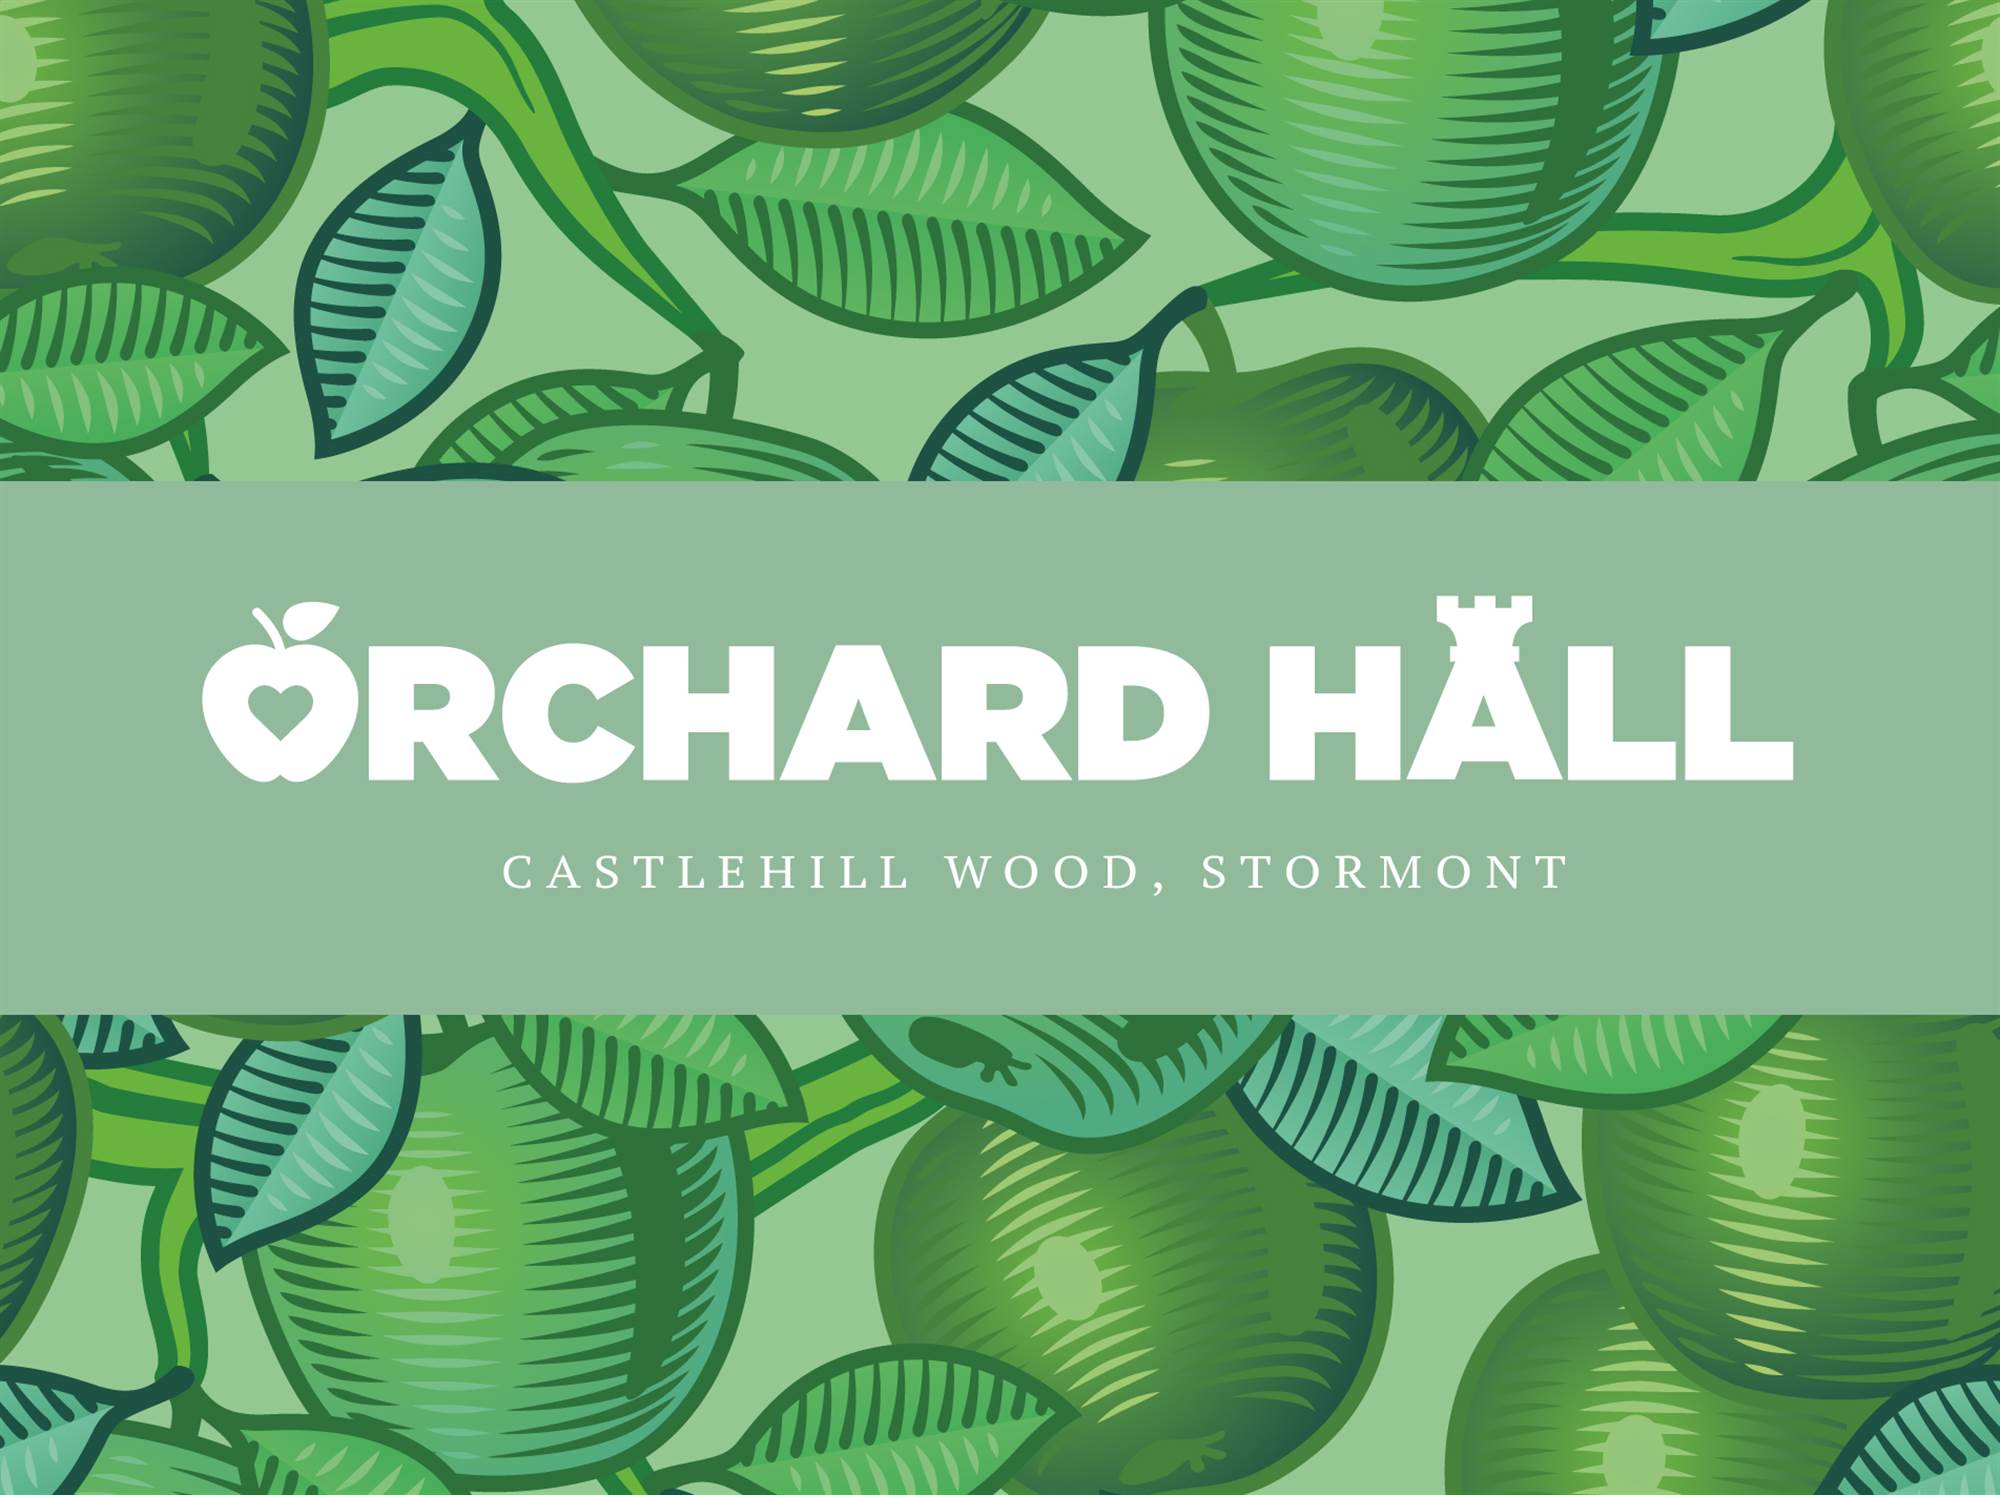 9 Orchard Hall, Castlehill Wood